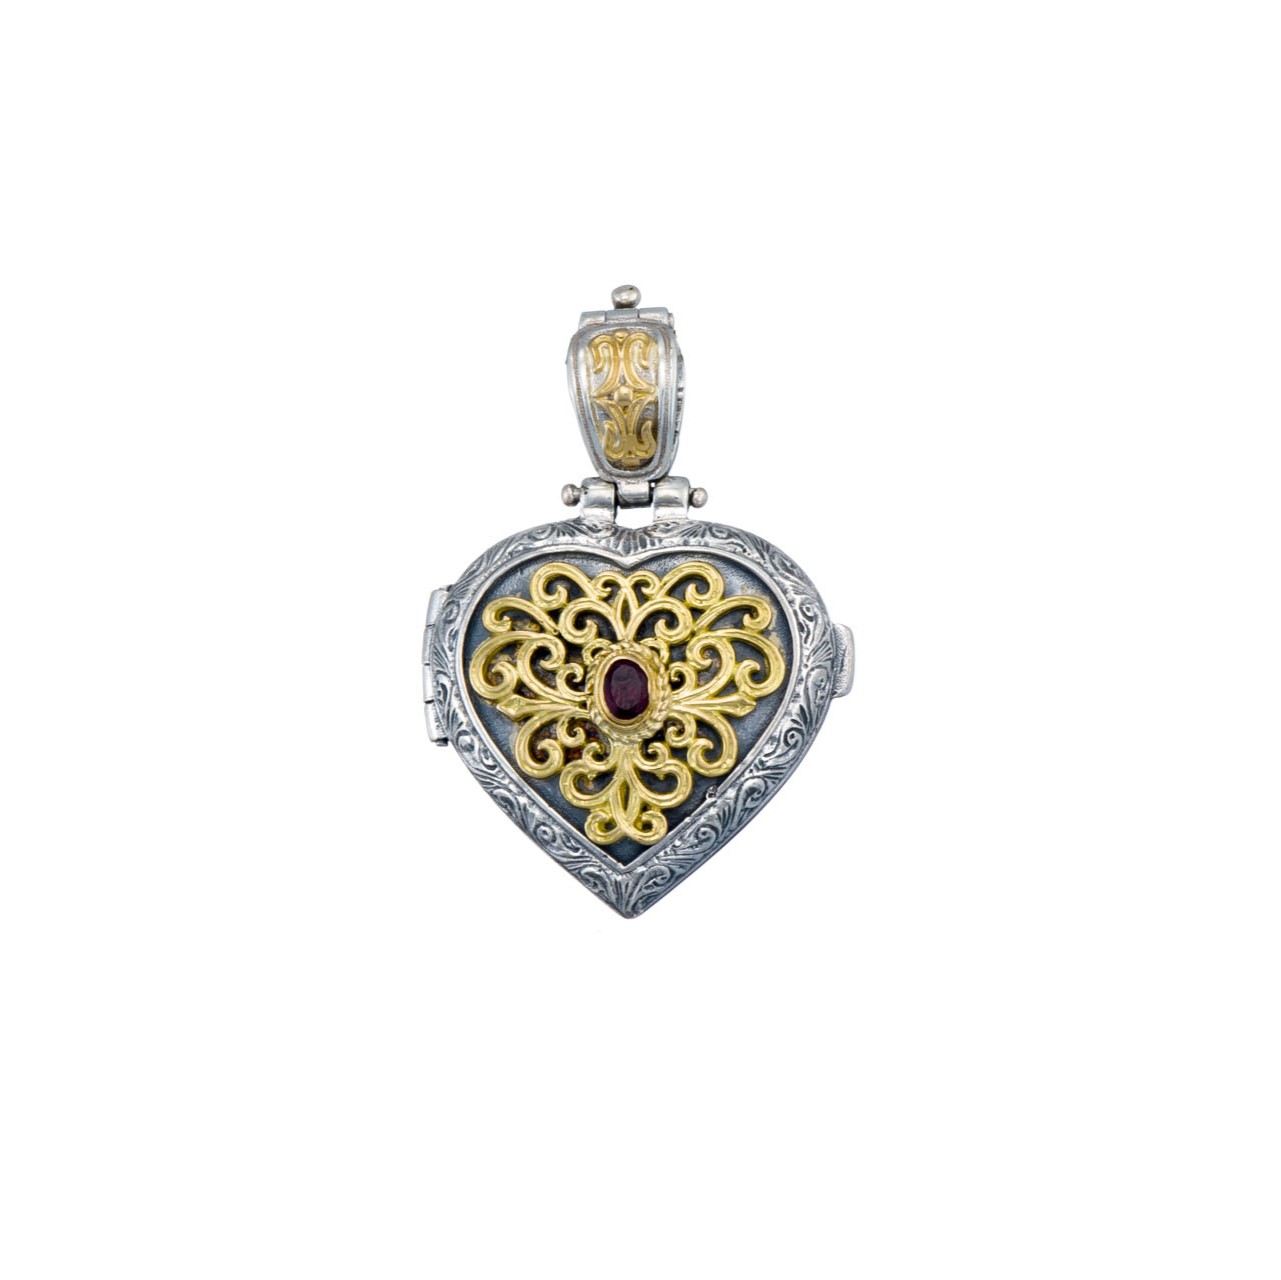 Mediterranean heart locket in 18K Gold and Sterling Silver